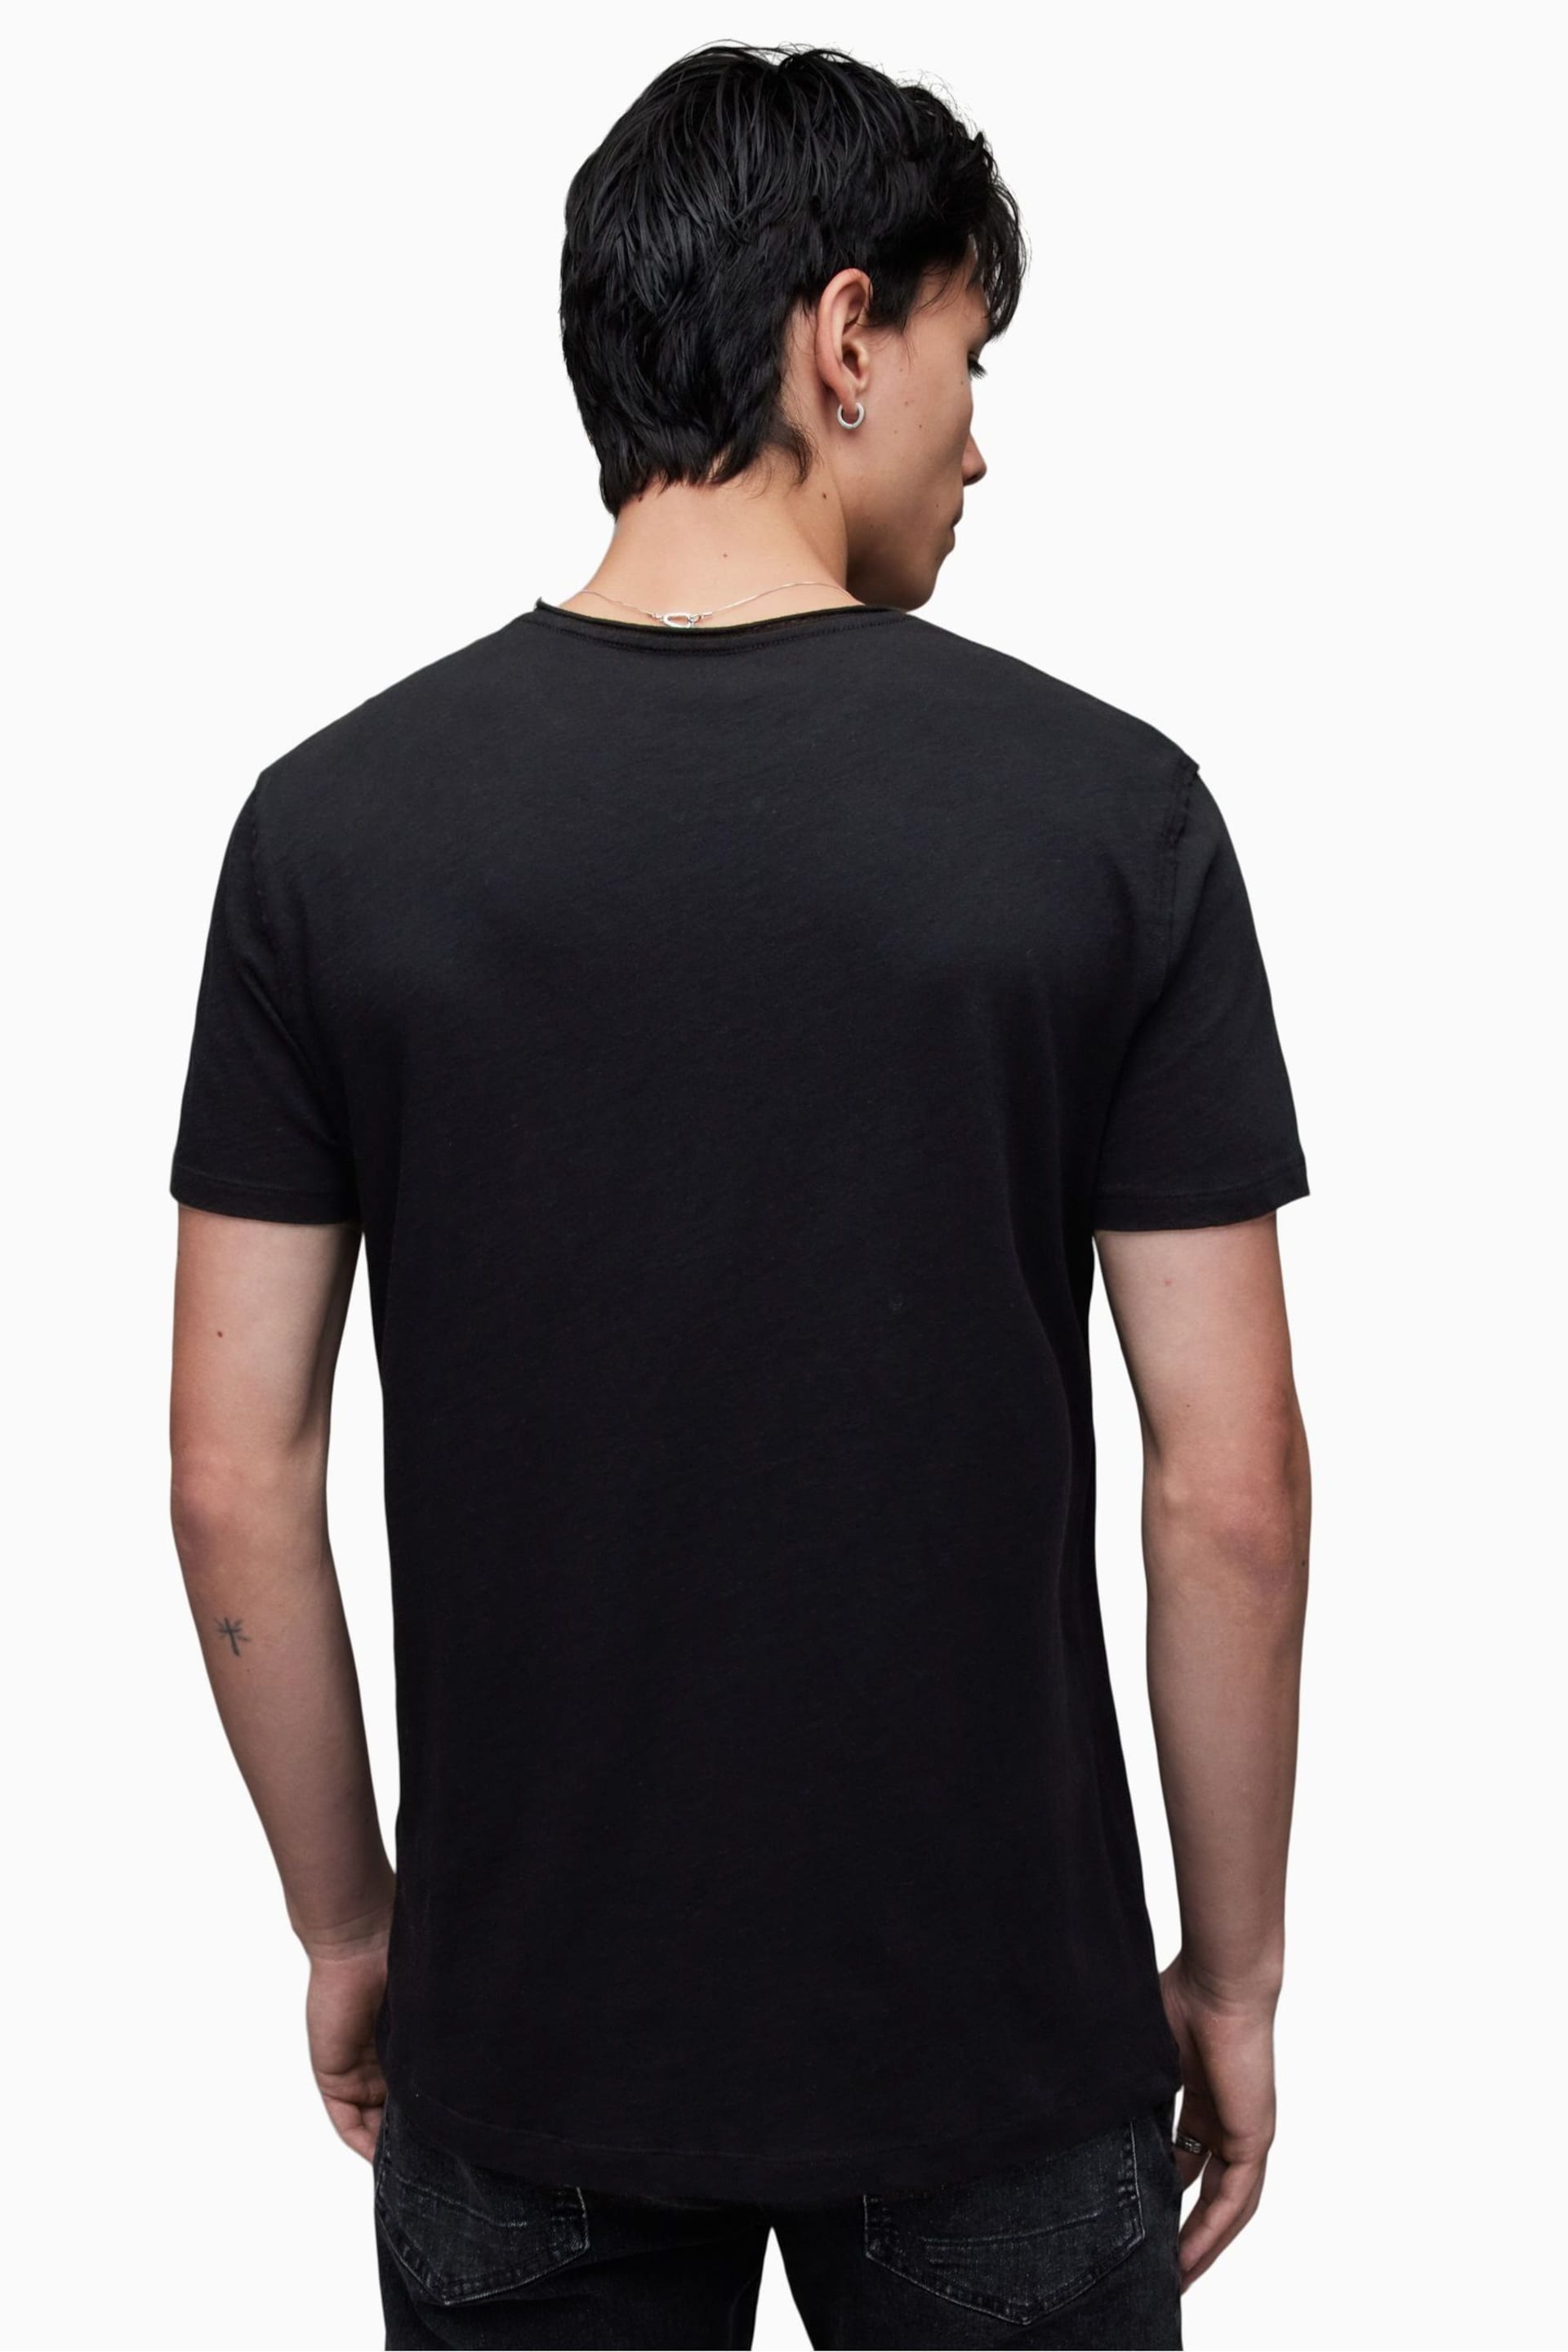 AllSaints Black Figure Short-Sleeve Crew T-Shirt - Image 2 of 7